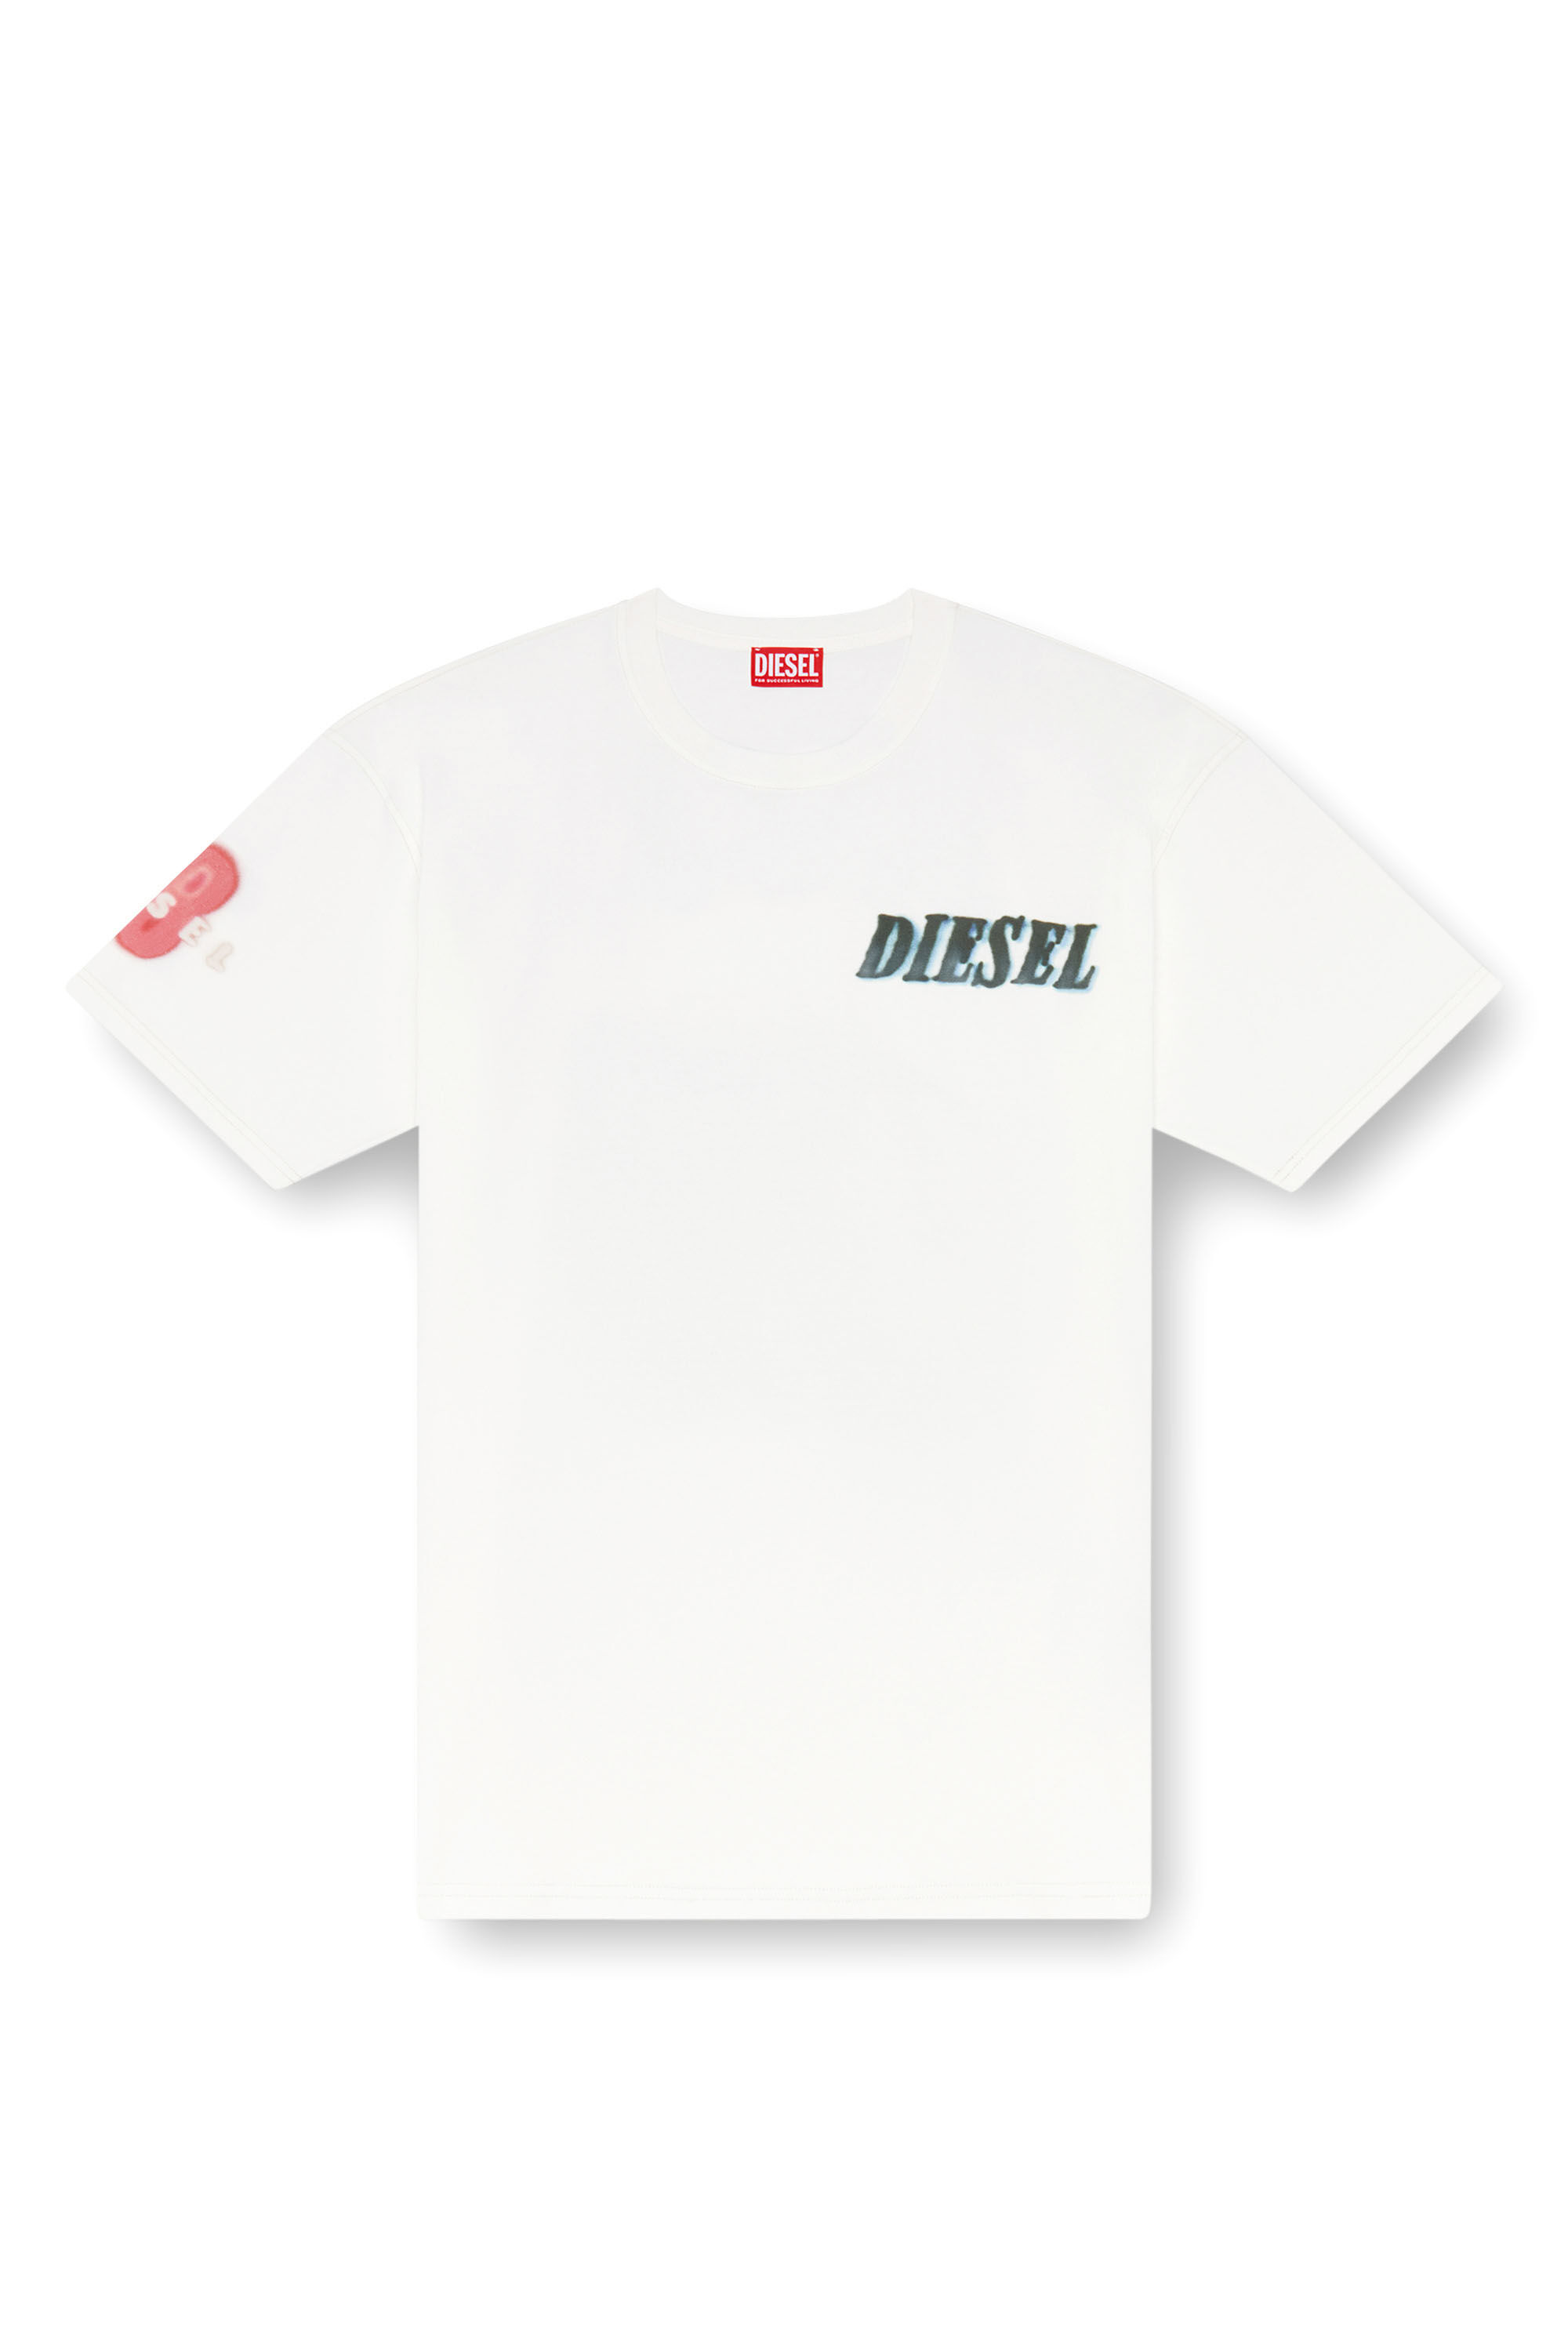 Diesel - T-BOXT-Q19, Uomo T-shirt con stampa logo e gomma in Bianco - Image 2